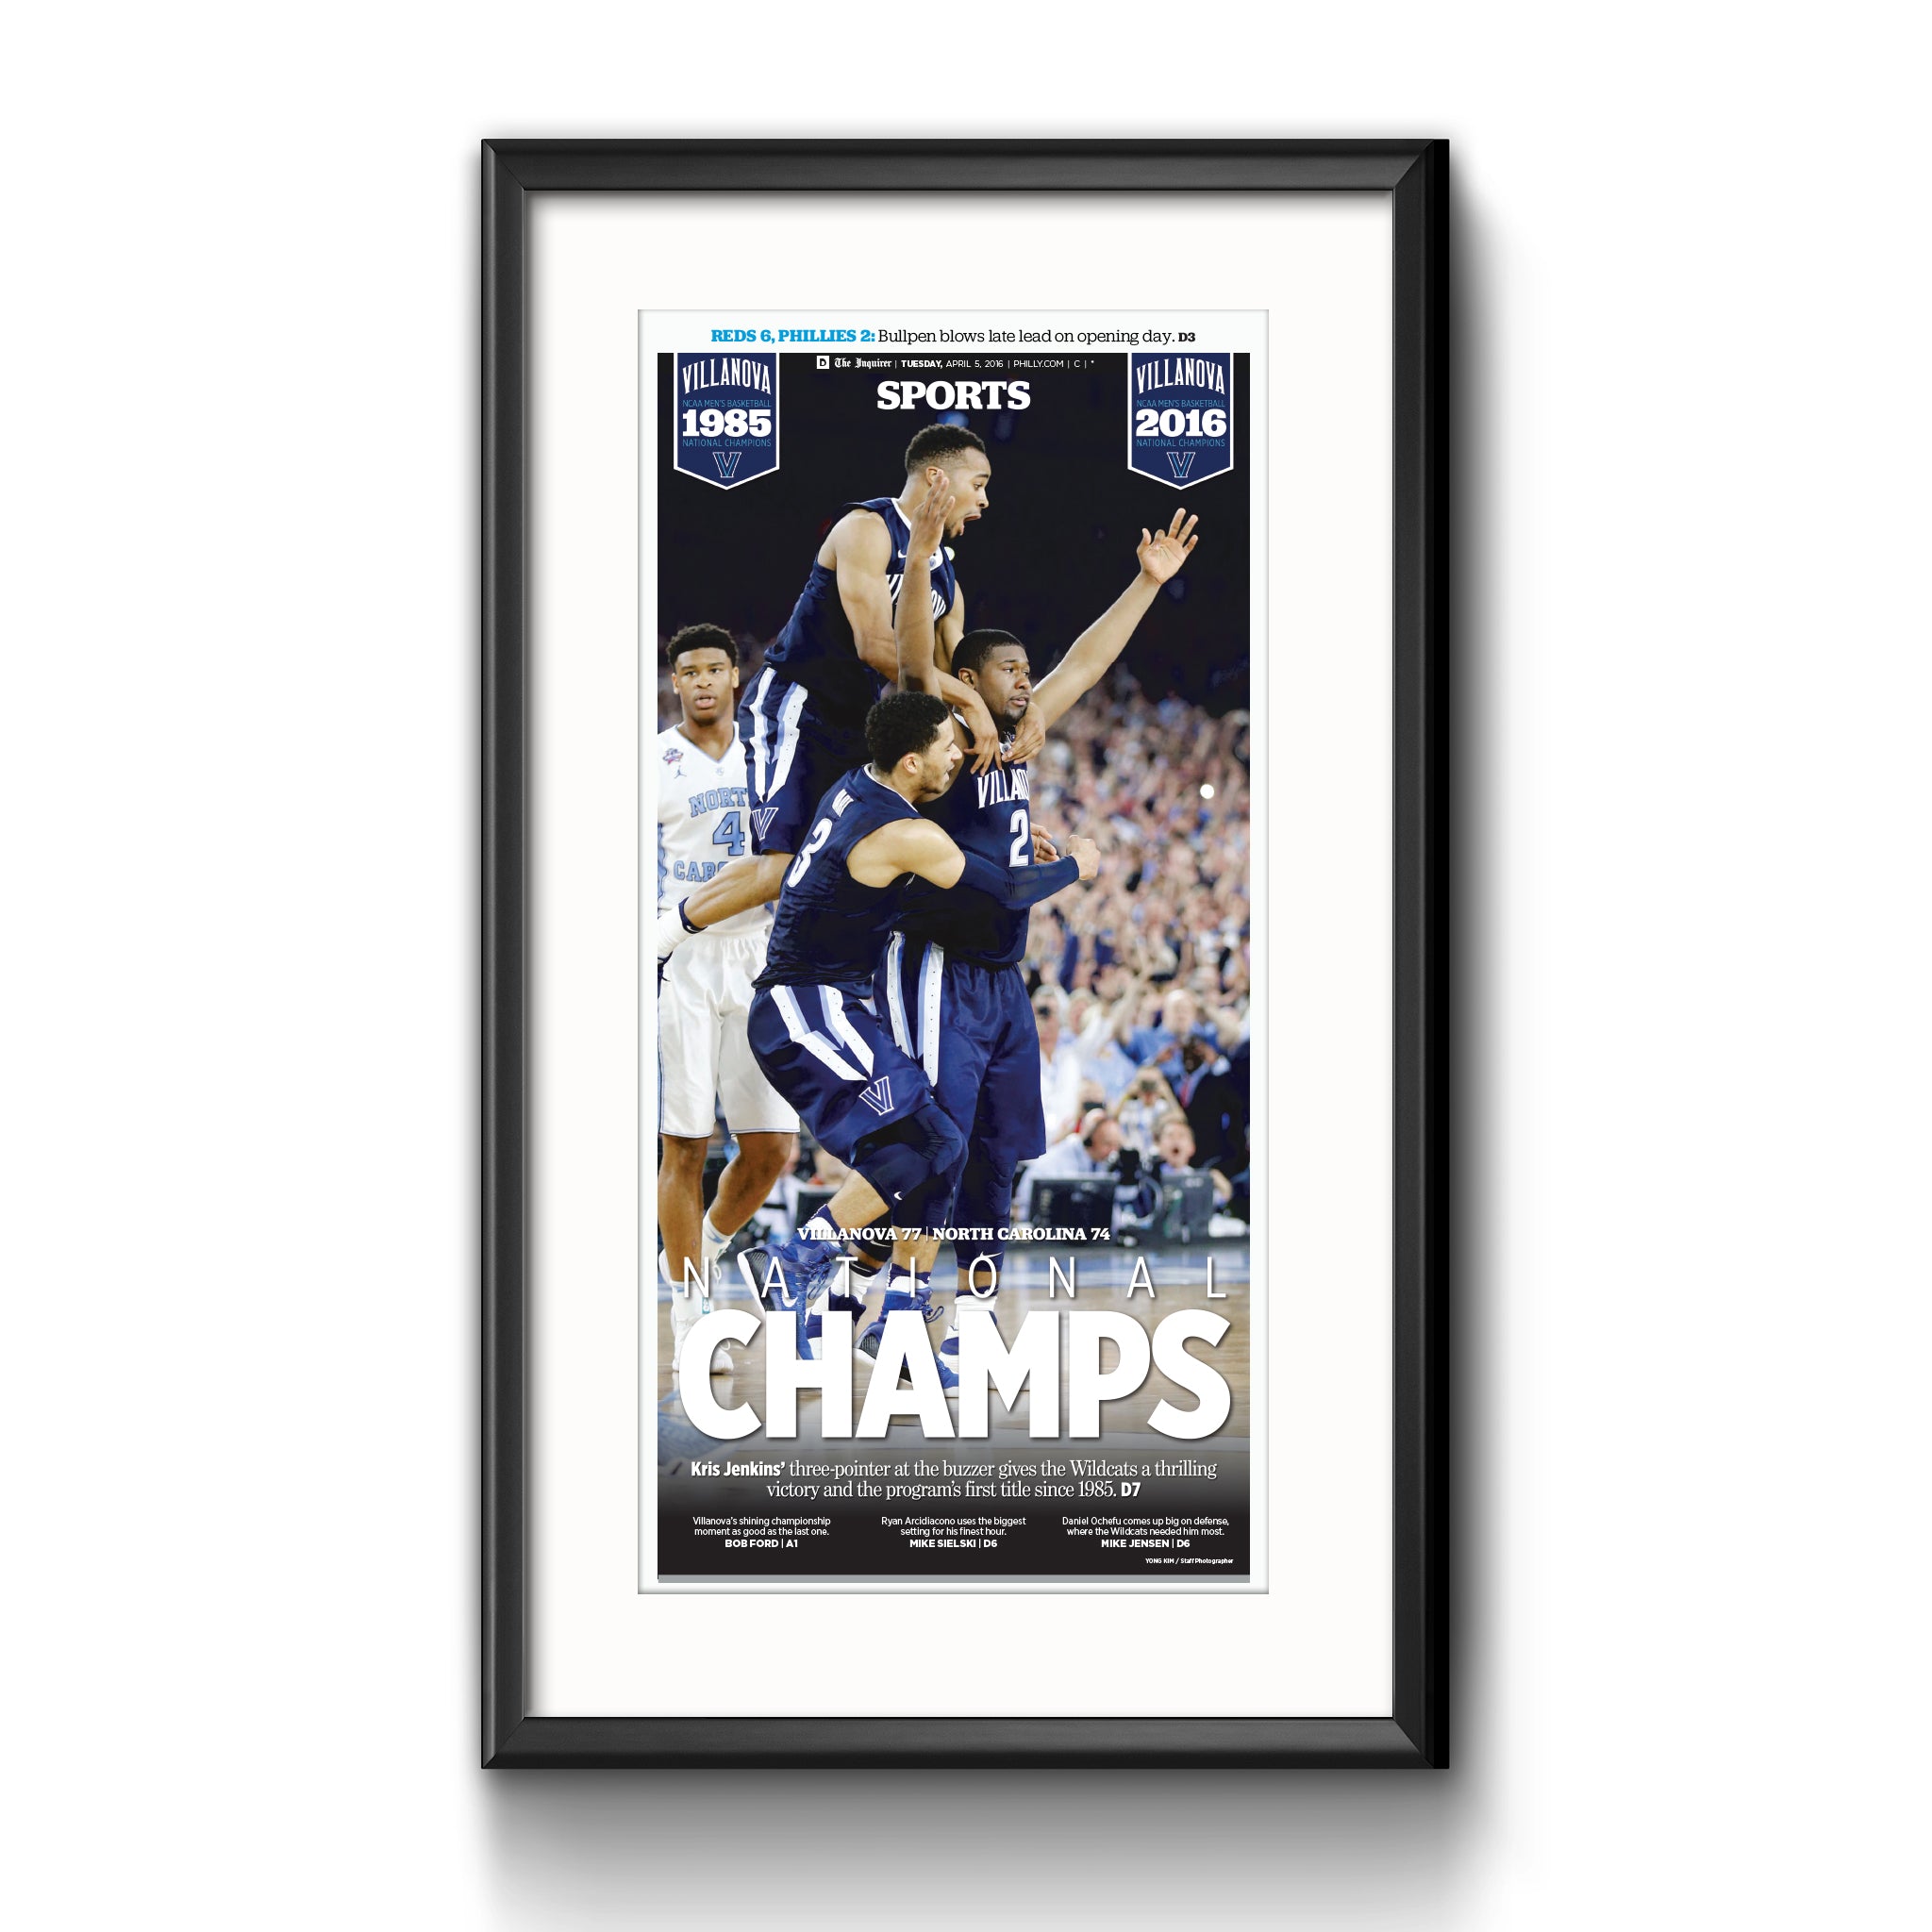 Dallas Mavericks 2011 NBA Champions Official Commemorative Poster